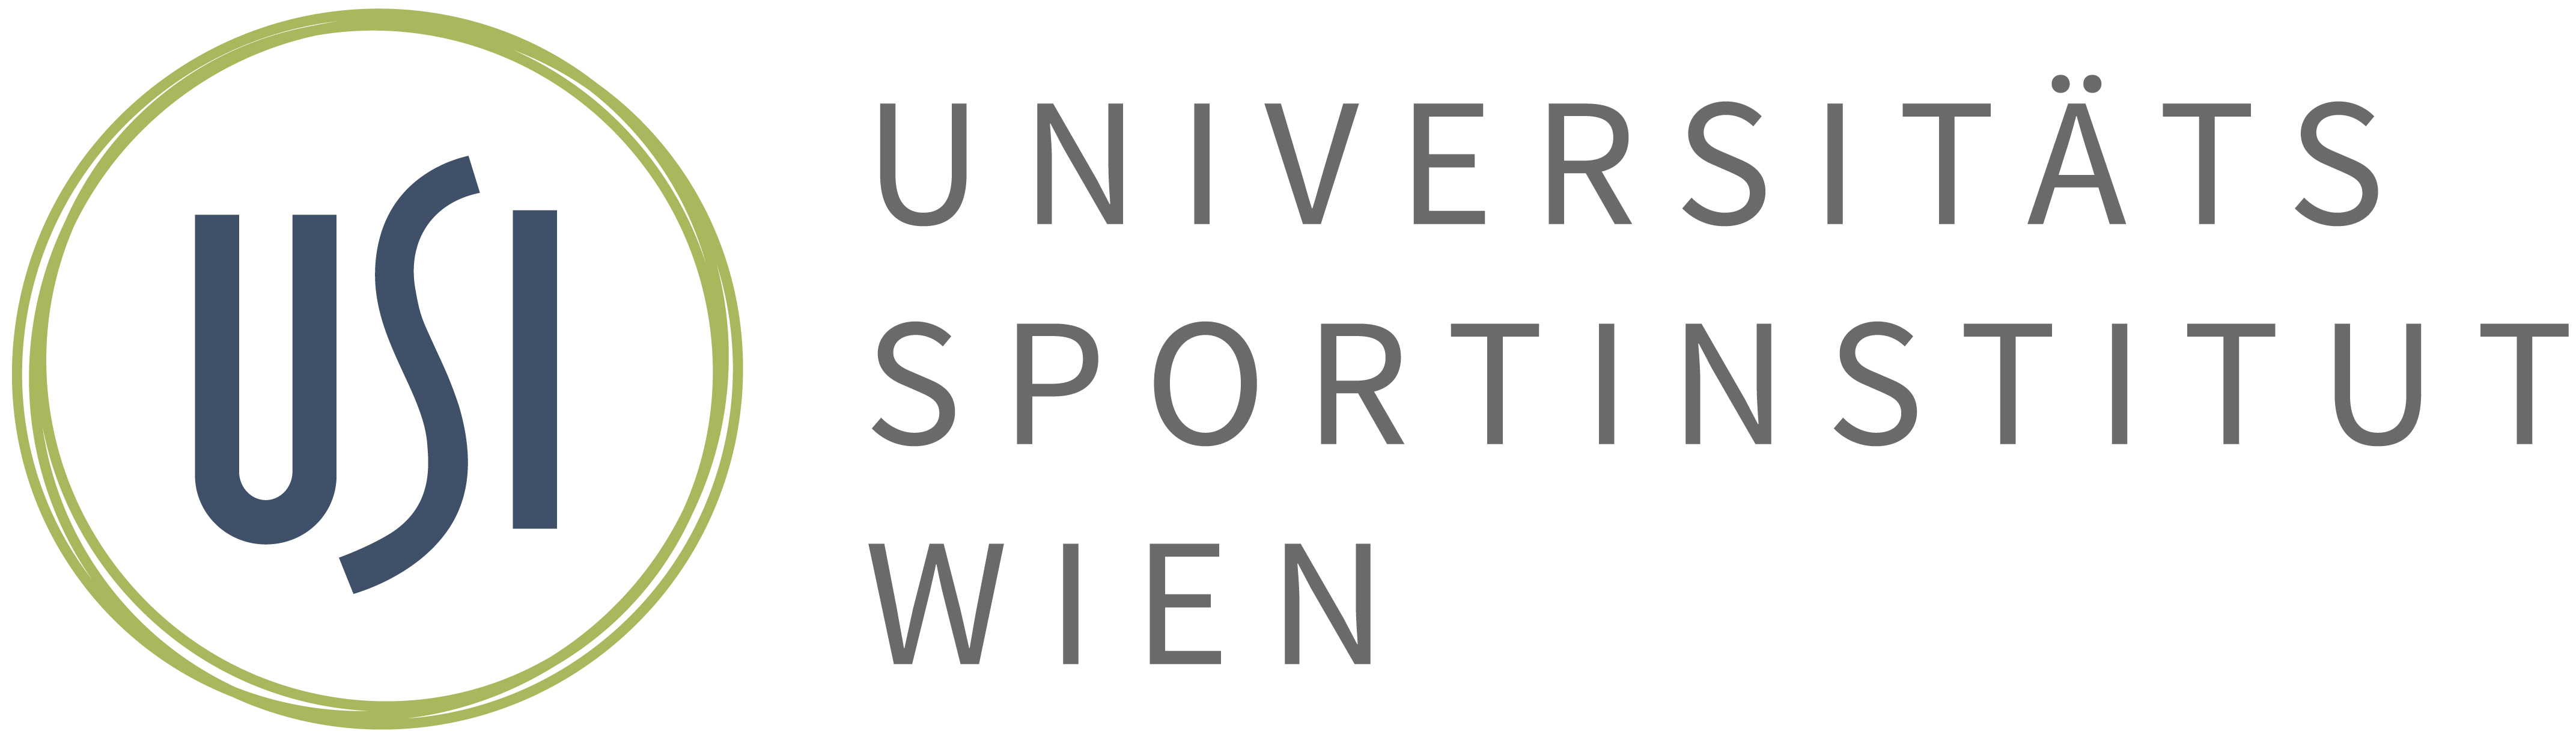 USI Header Logo